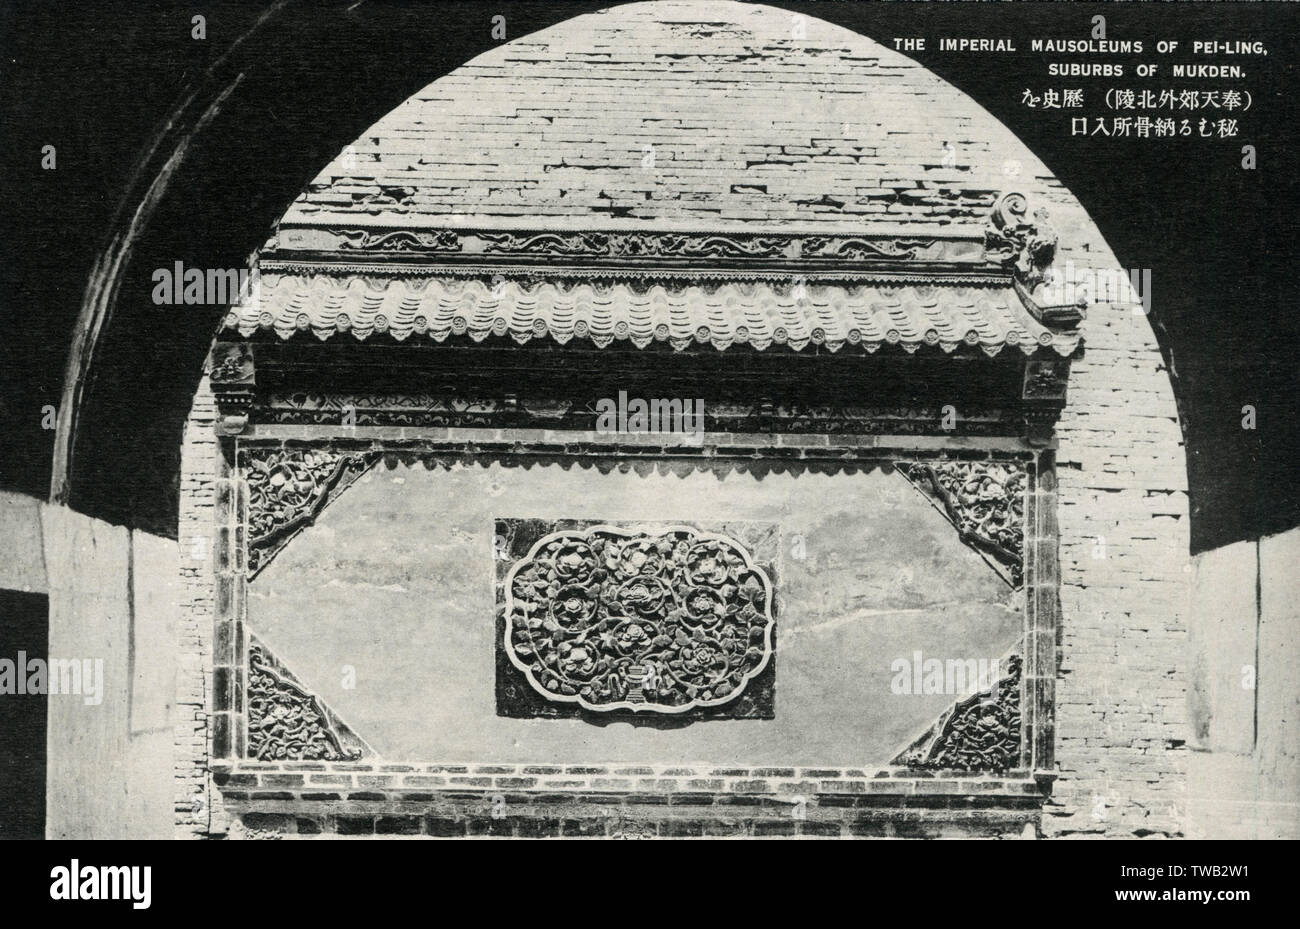 Das Fuling Mausoleum, Qing Dynastie - Shenyang, China Stockfoto